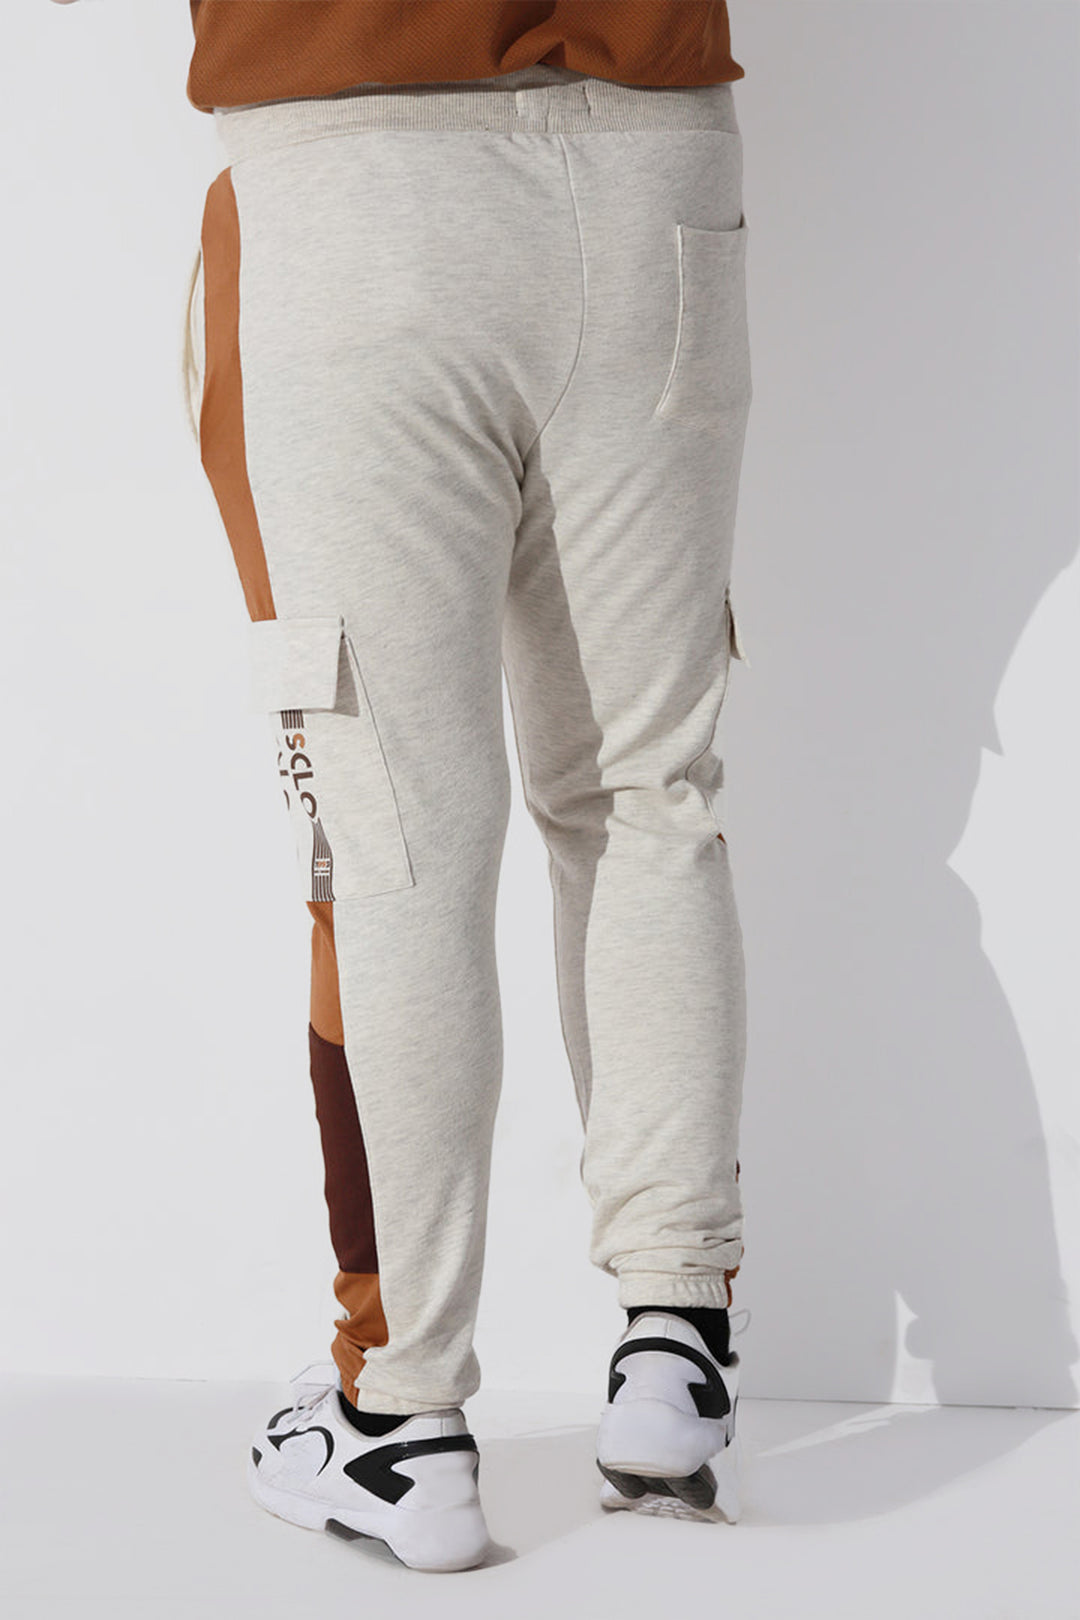 Brown Panel Striped Jog Pants (Plus Size) - P22 - MTR035P